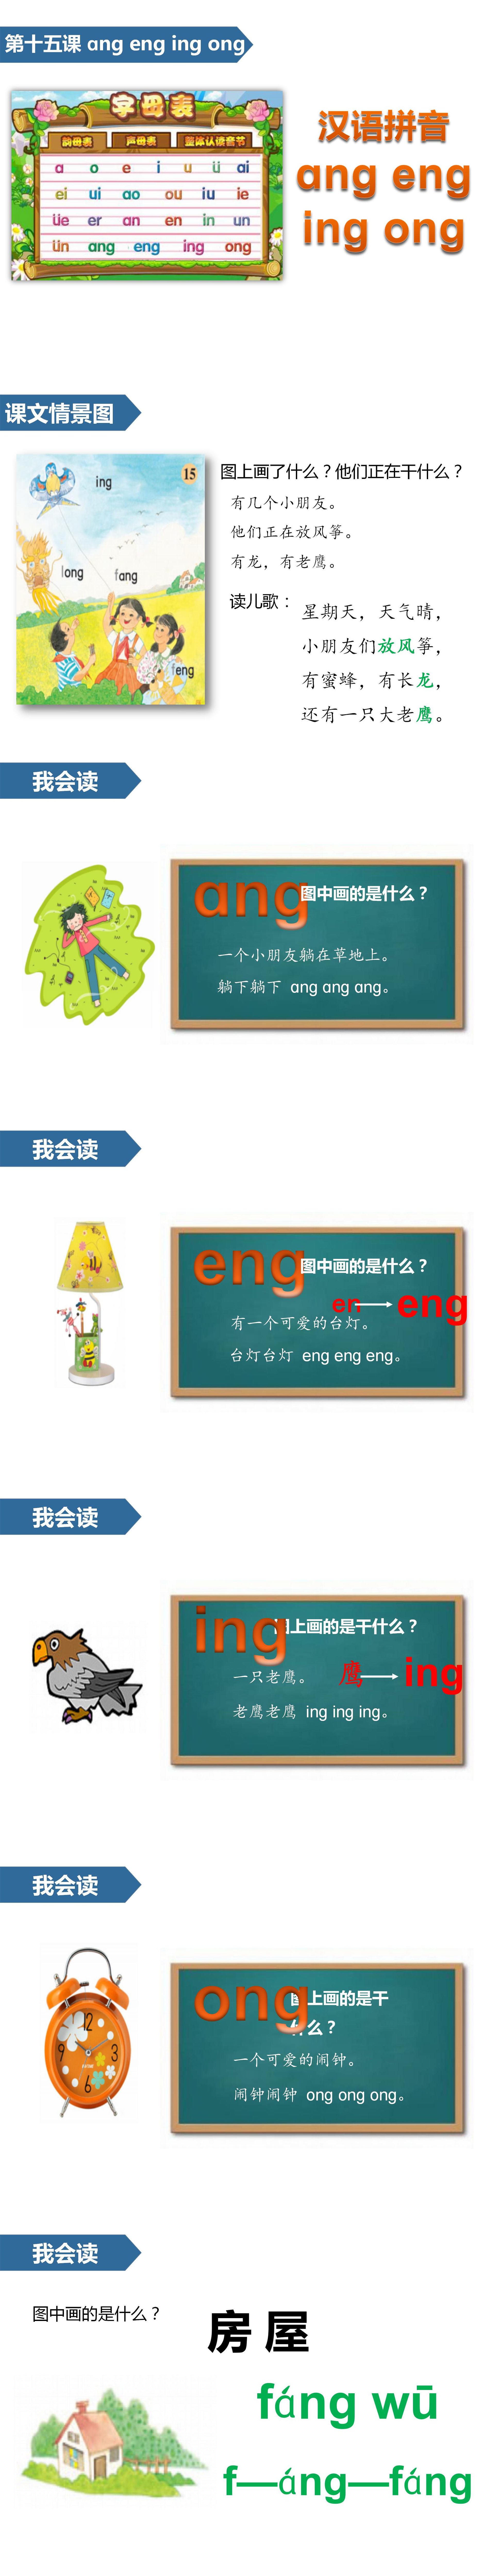 小学语文课件《angengingong》汉语拼音PPT模板